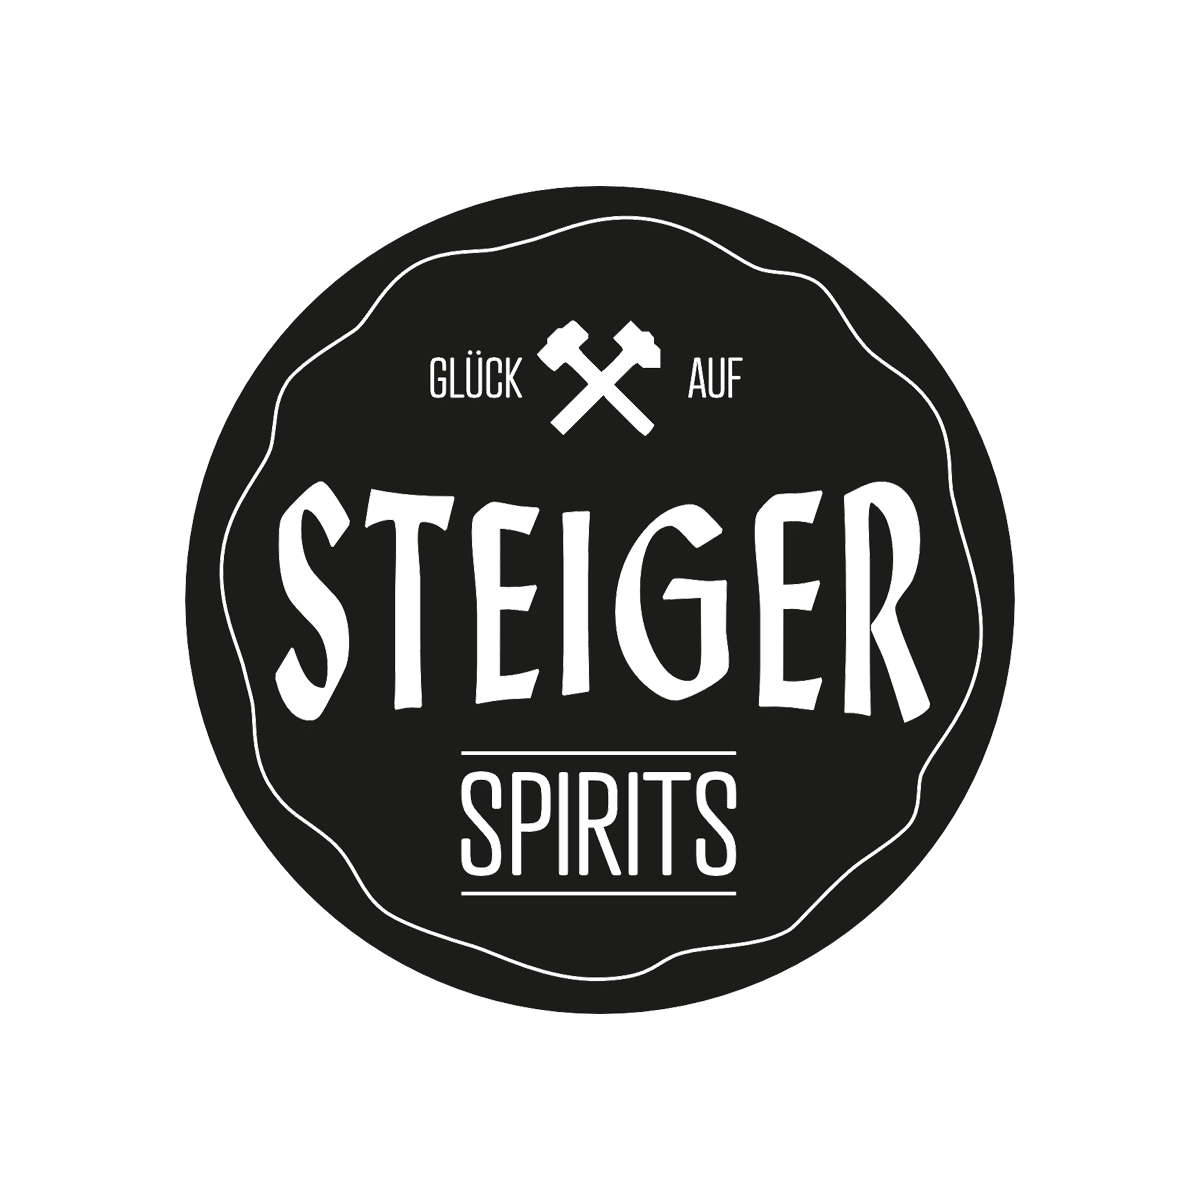 Steiger Spirits logo